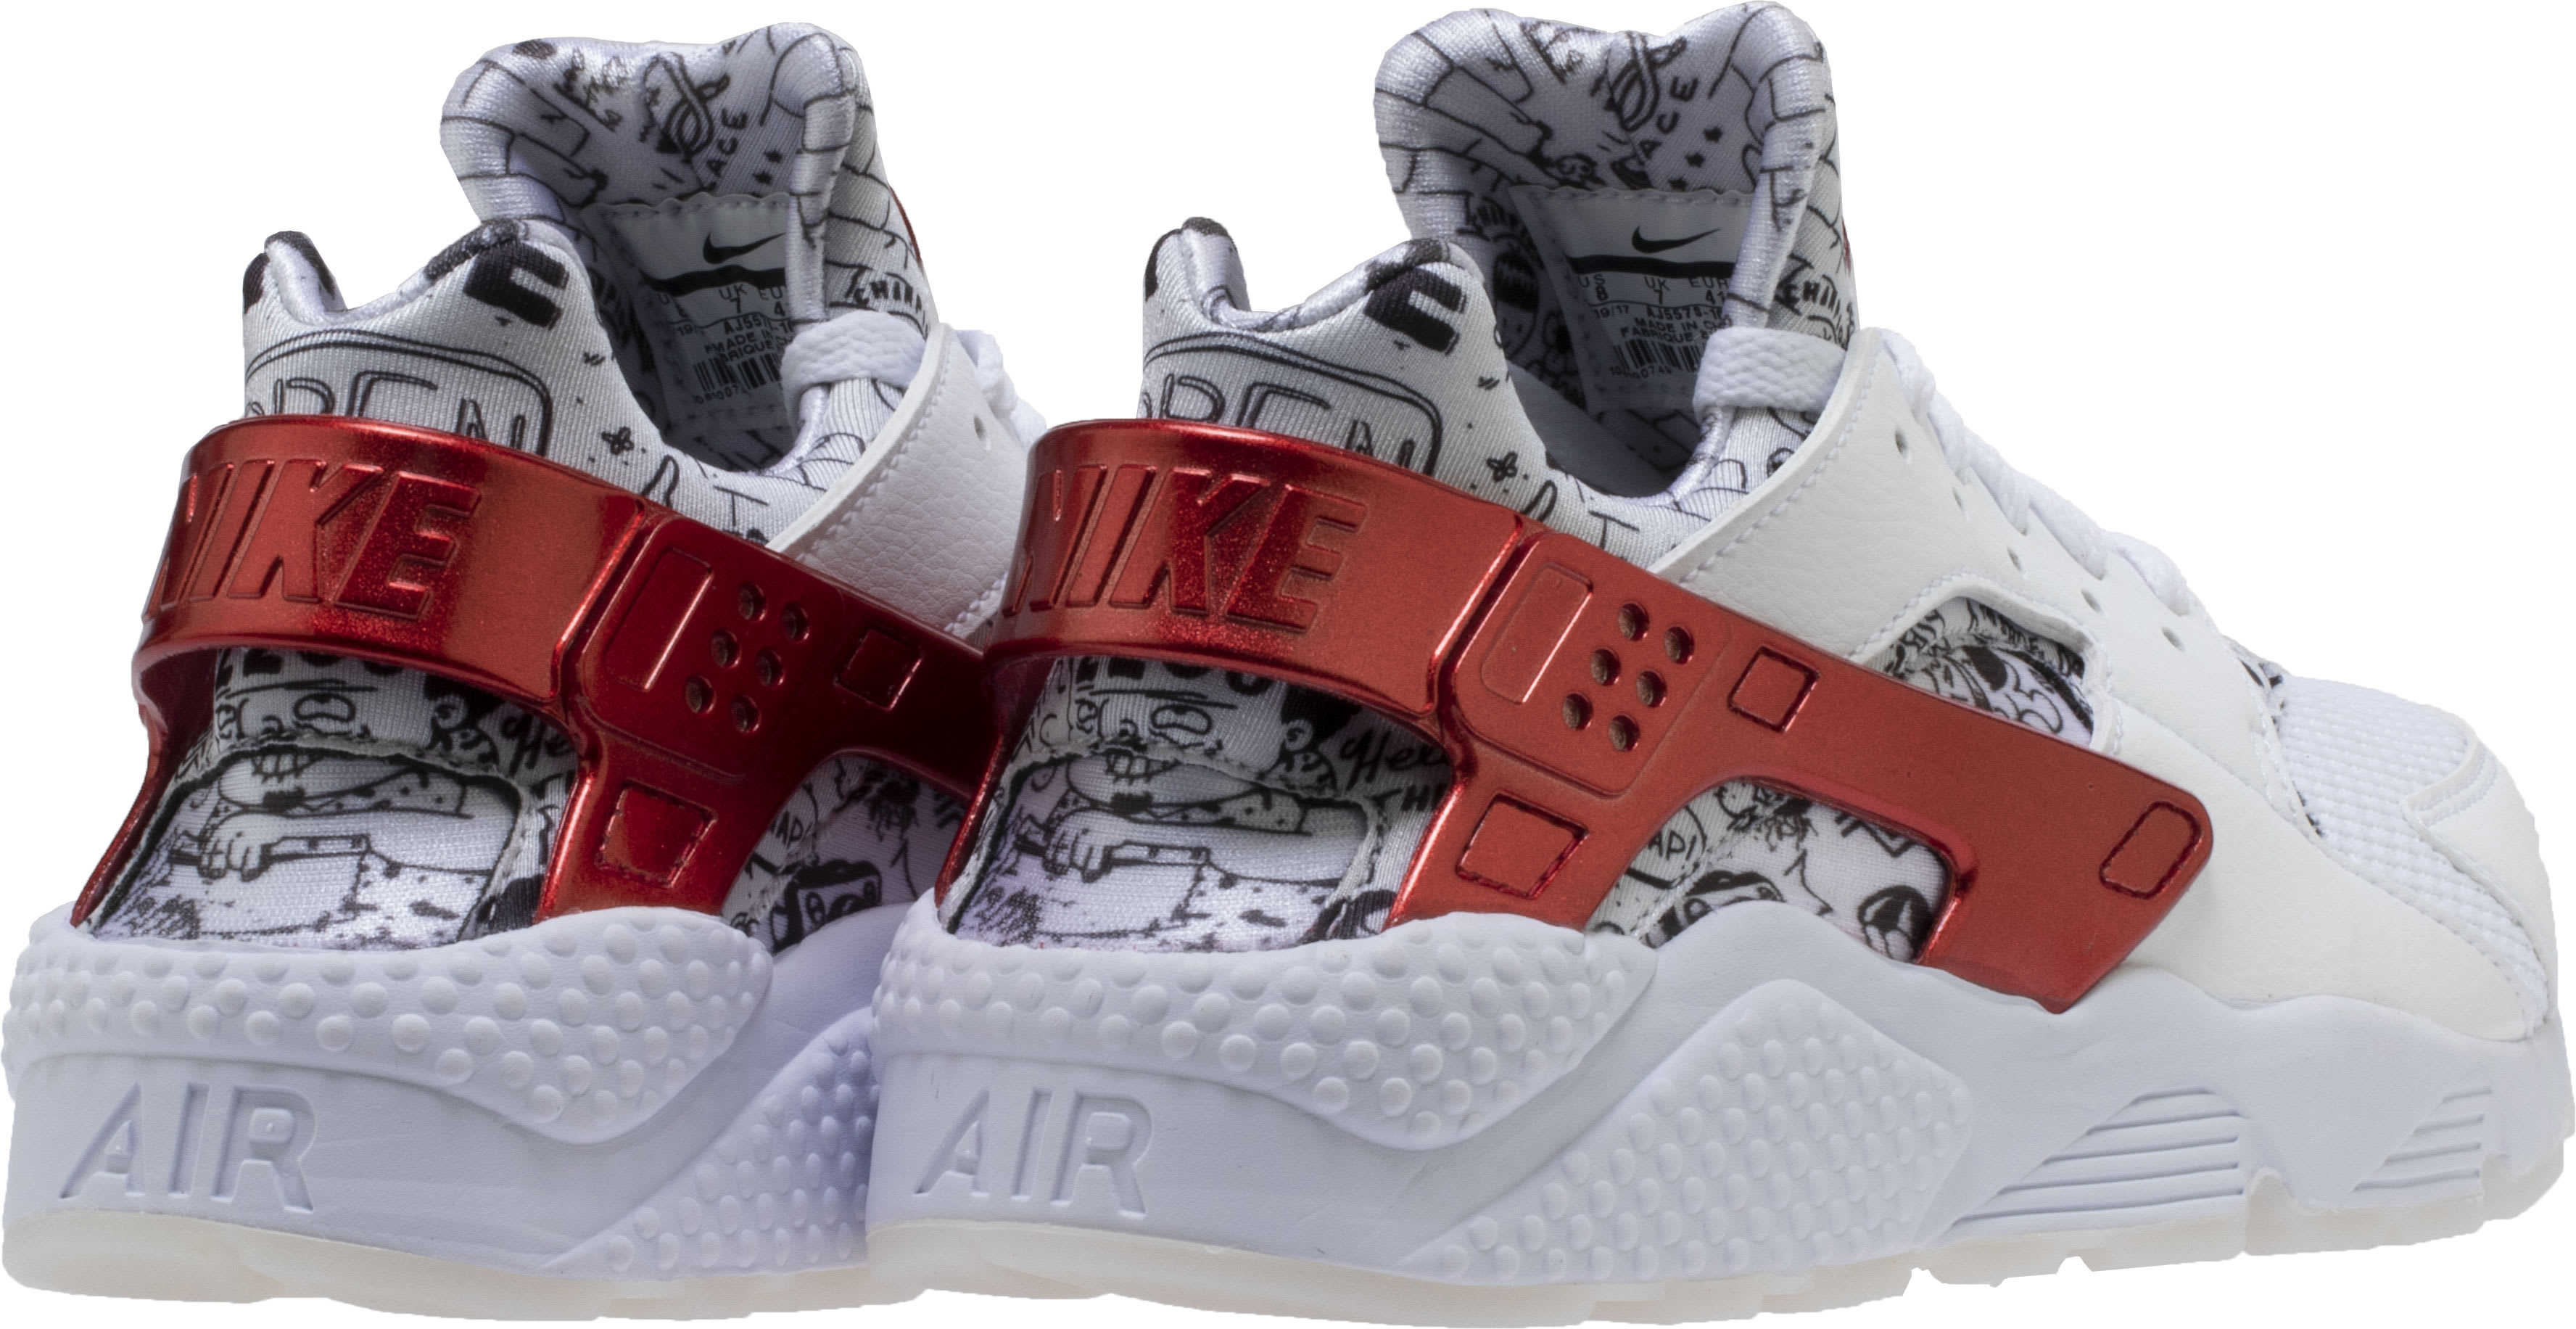 Shoe Palace x Nike Air Huarache White/Red/Platinum &#x27;Joonbug&#x27; AJ5578-101 (Heel)